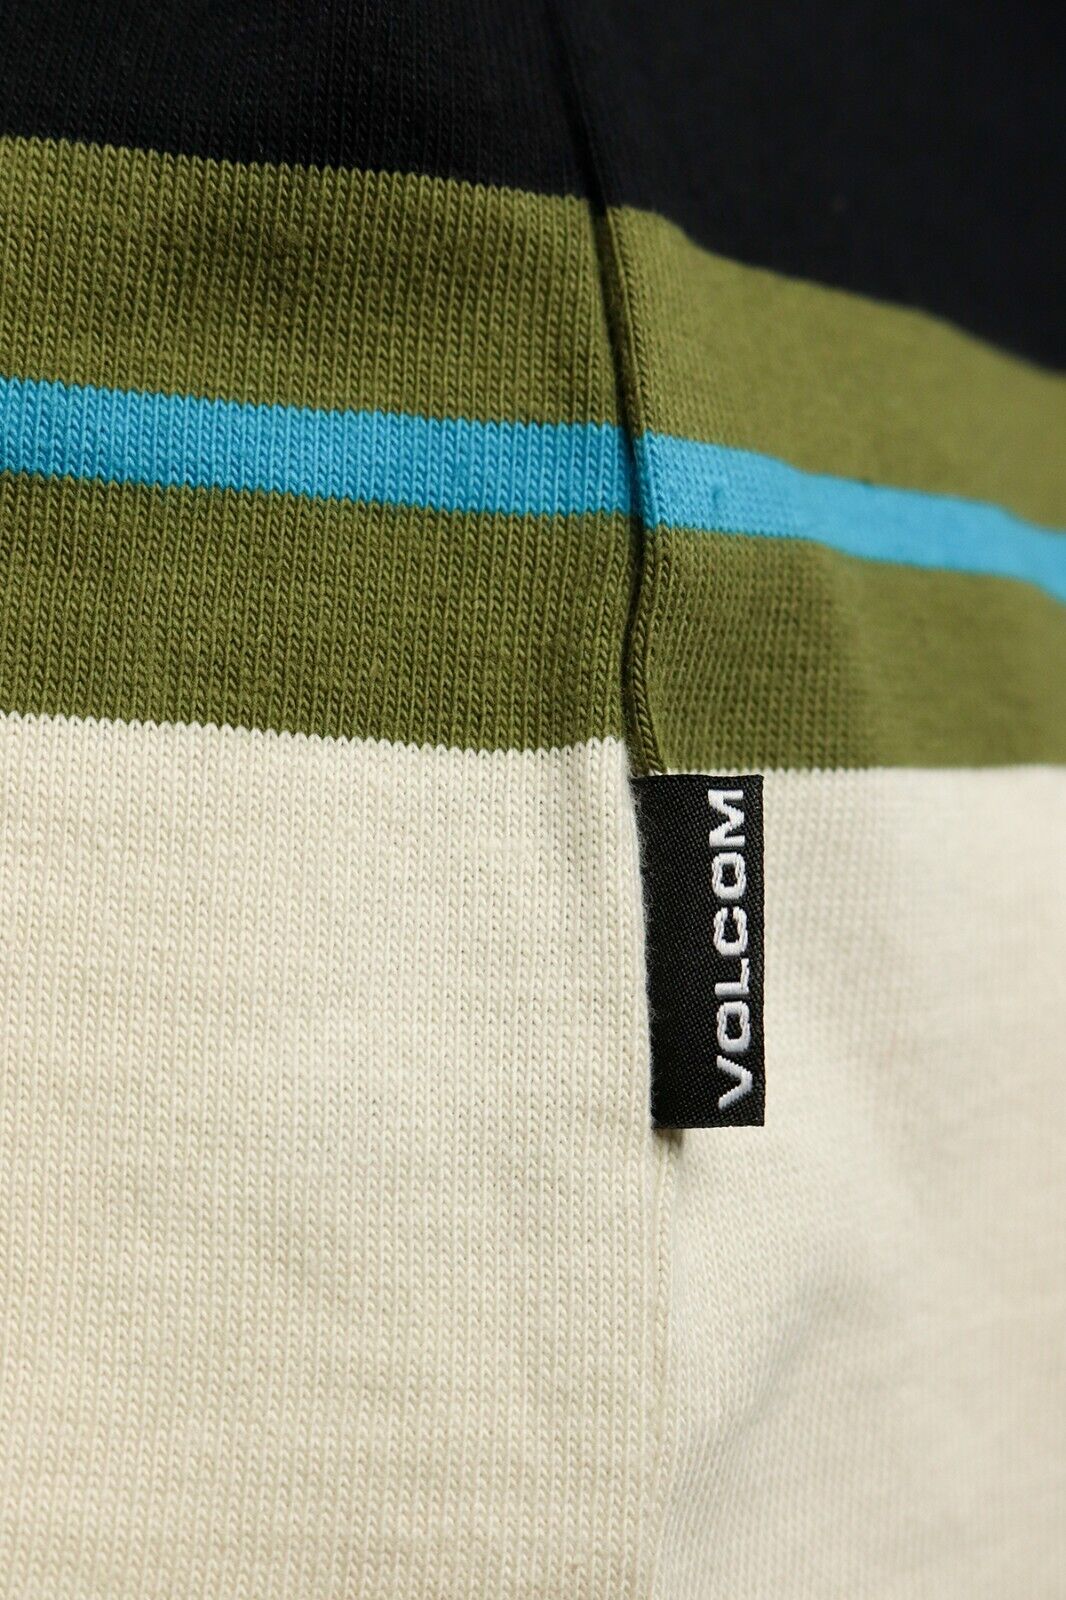 Volcom Men's Black, Olive Green & Beige Striped L/S Polo T-Shirt (S03)